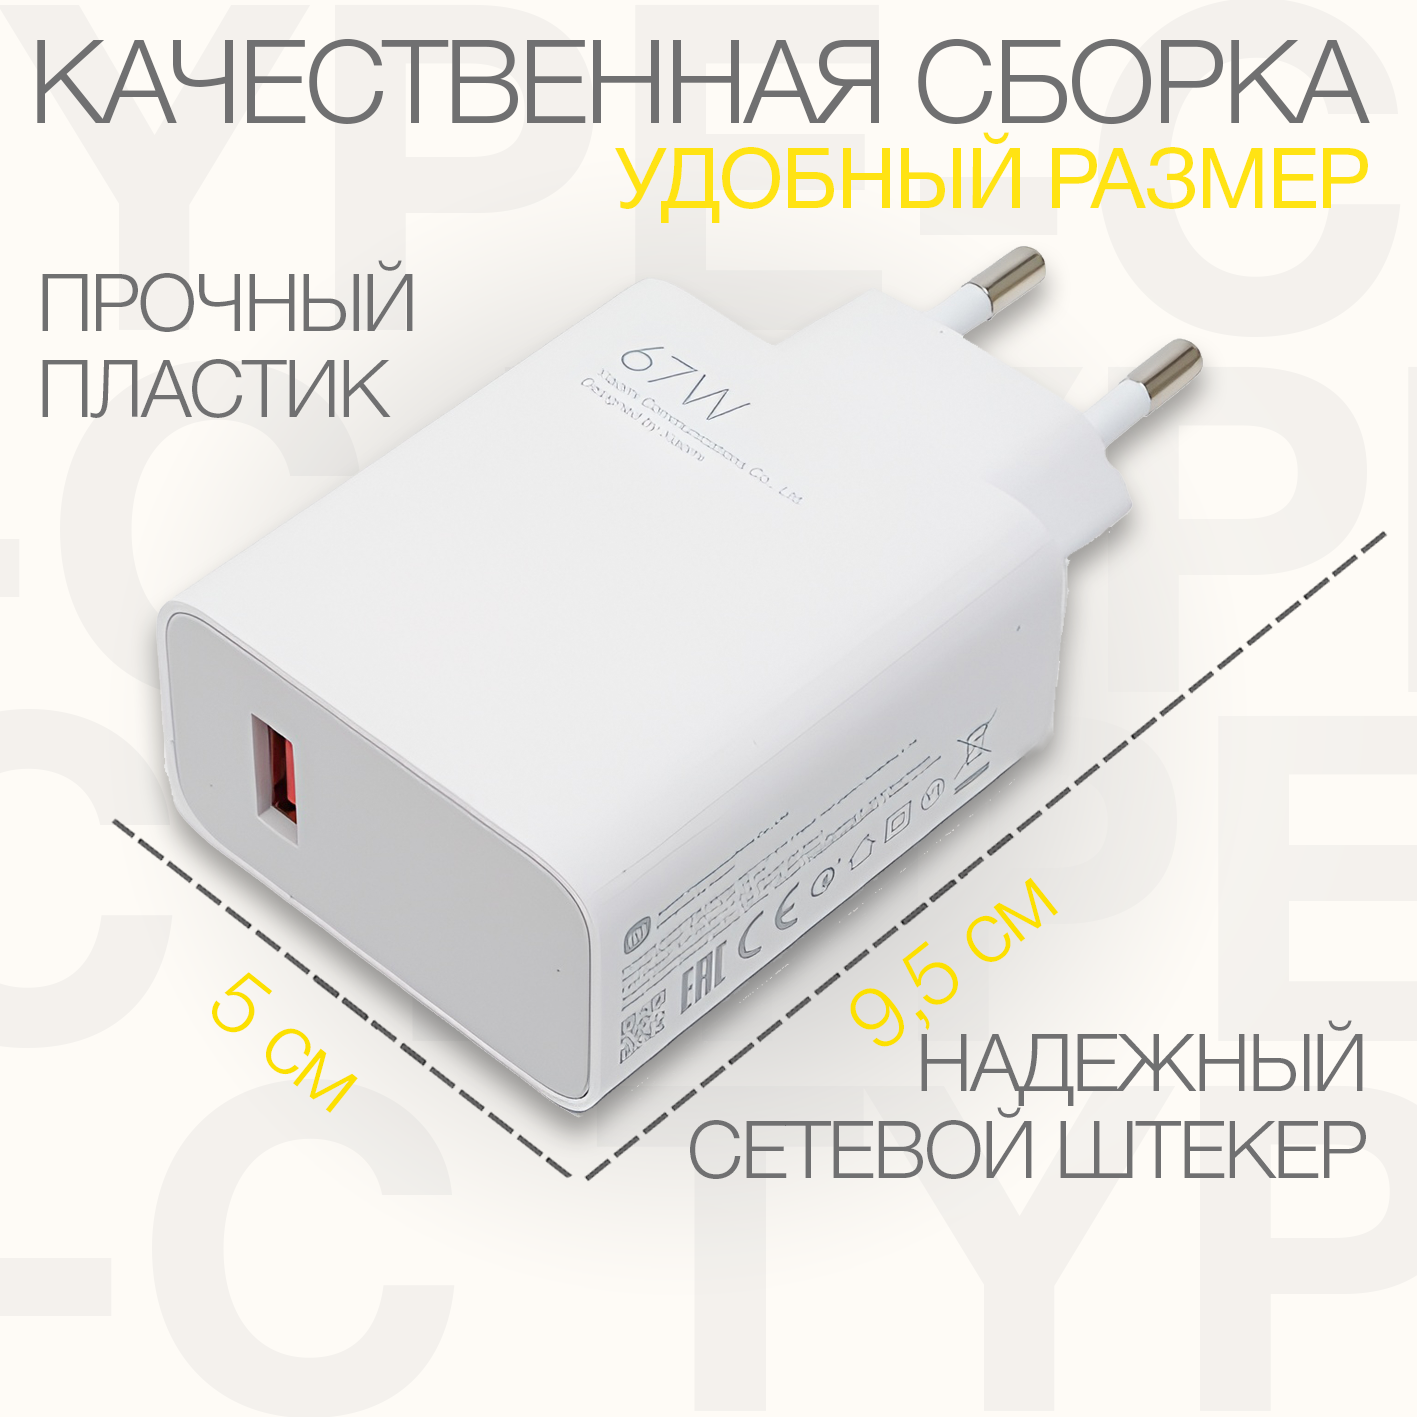 Зарядное устройство 67w с кабелем USB - USB-C / быстрая зарядка type-c \ TURBO CHARGE